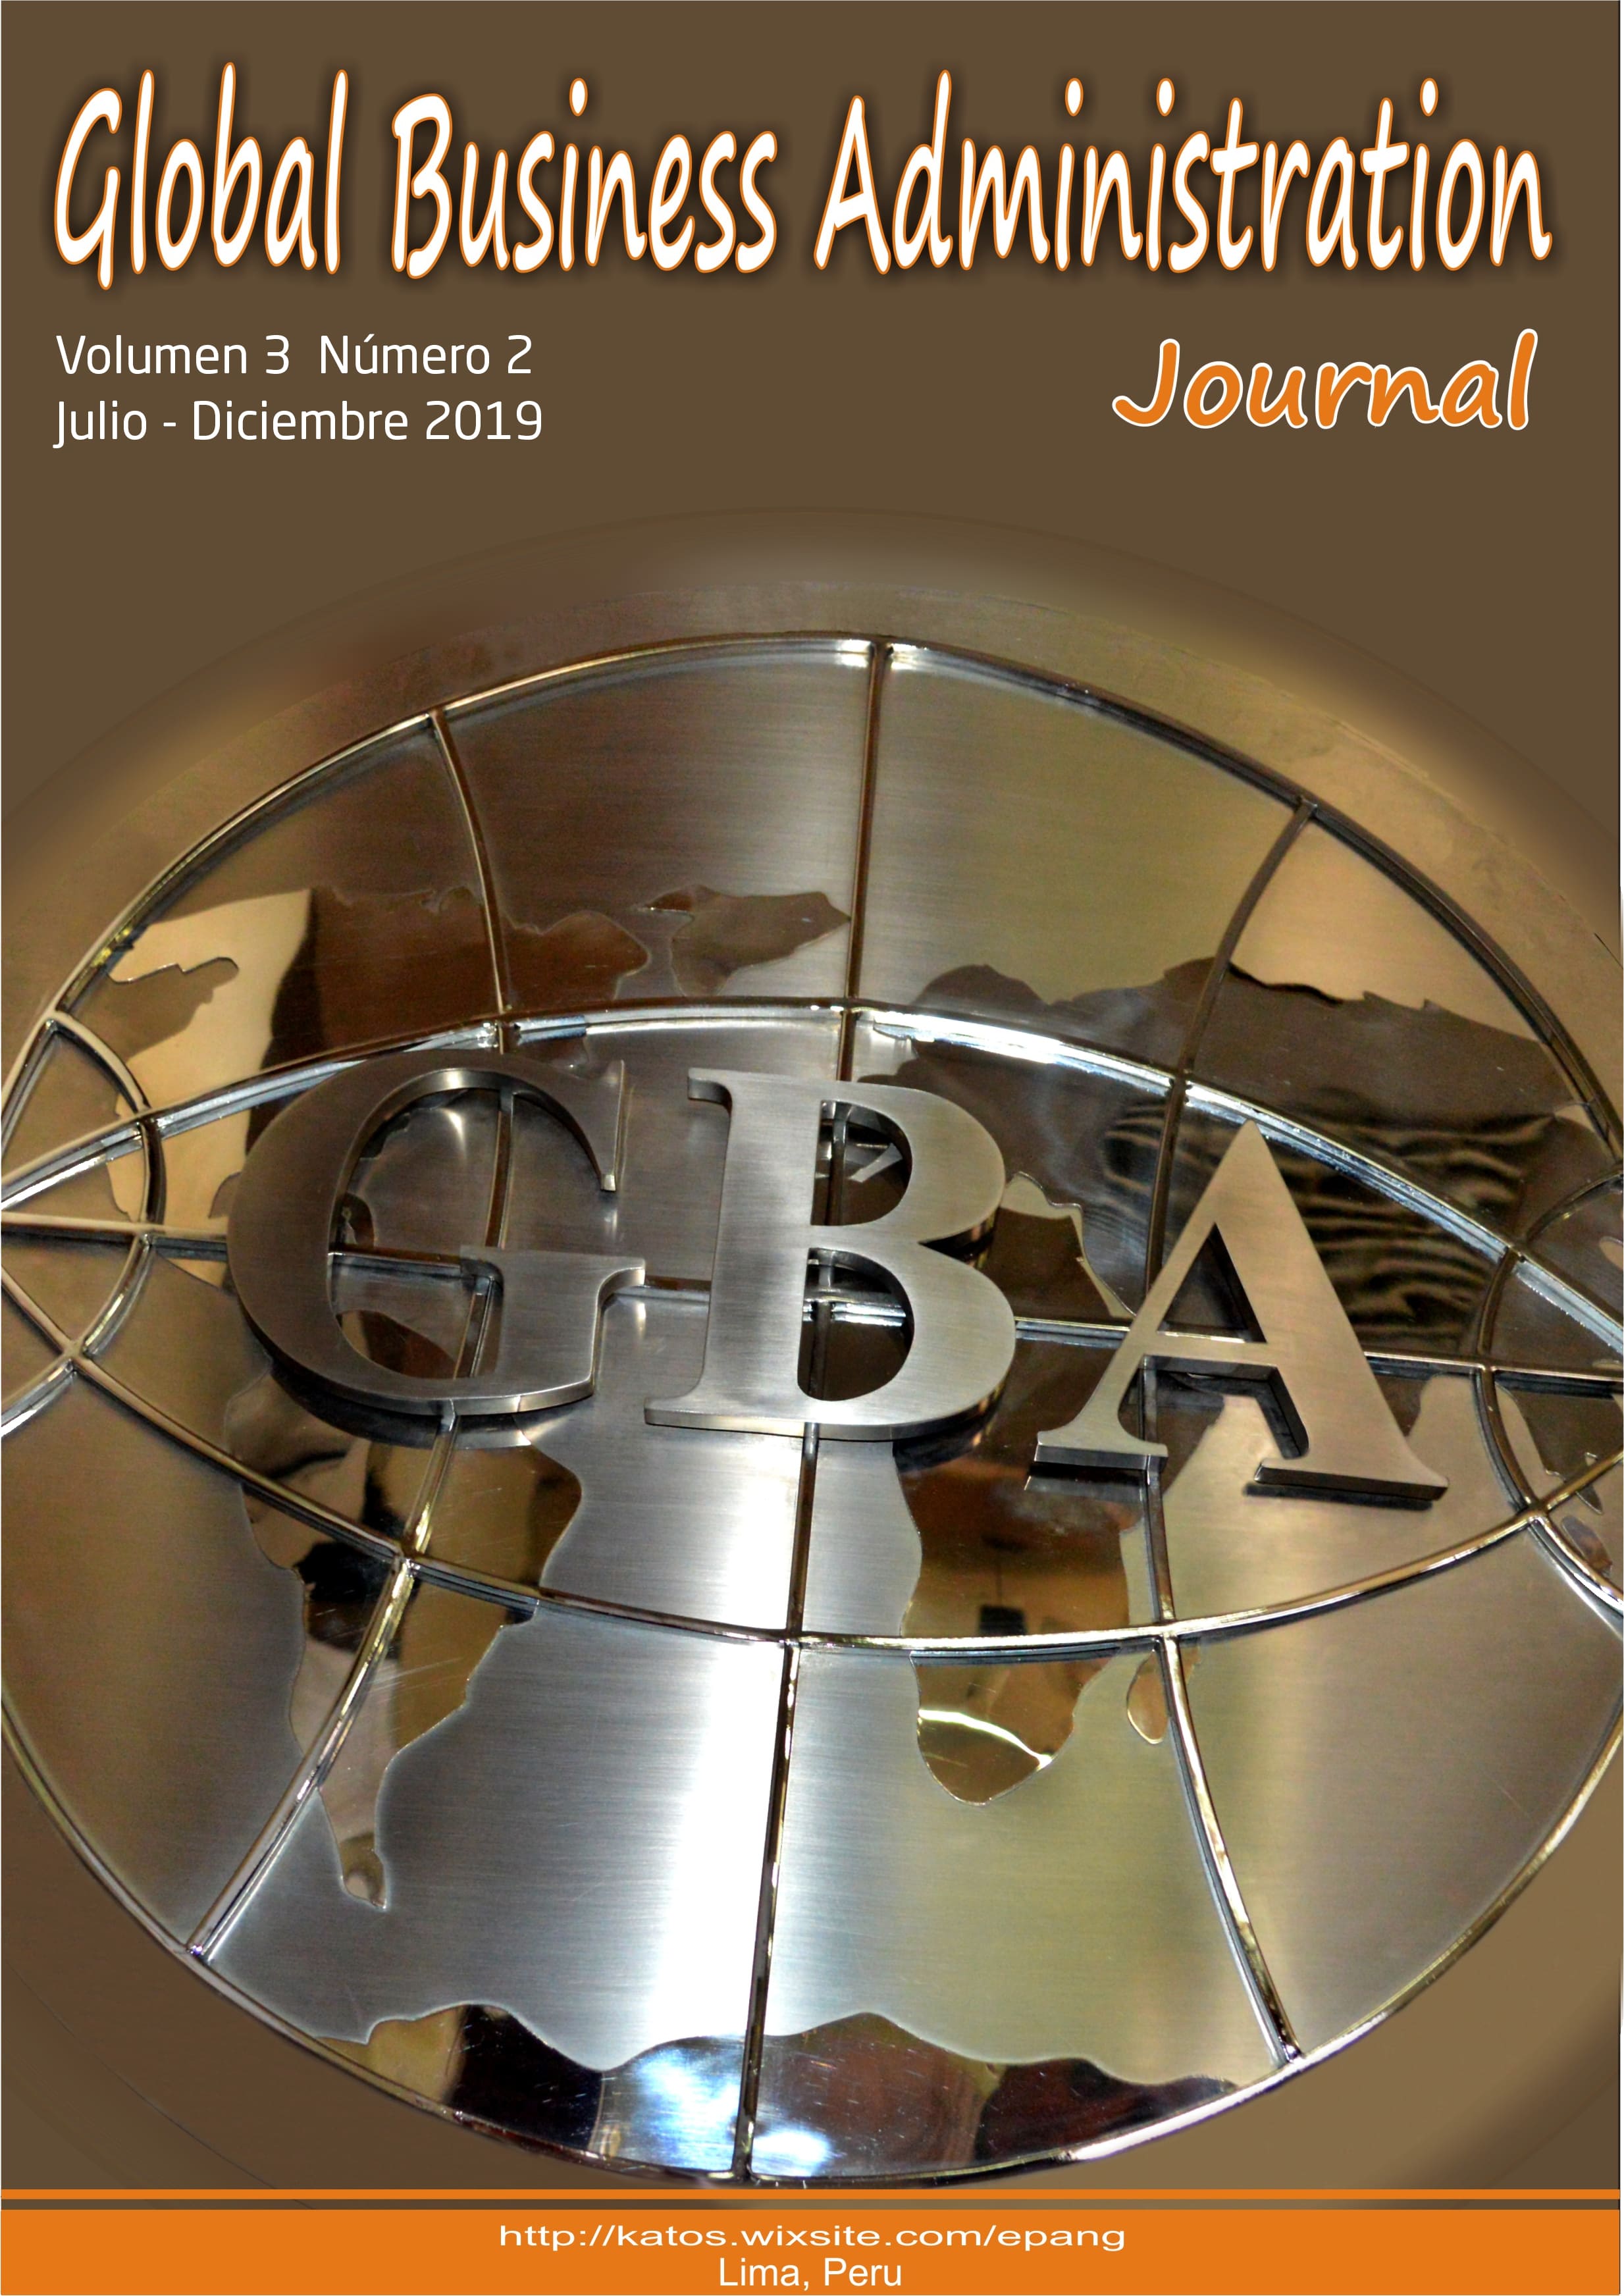 					Ver Vol. 3 Núm. 2 (2019): GLOBAL BUSINESS ADMINISTRATION JOURNAL
				